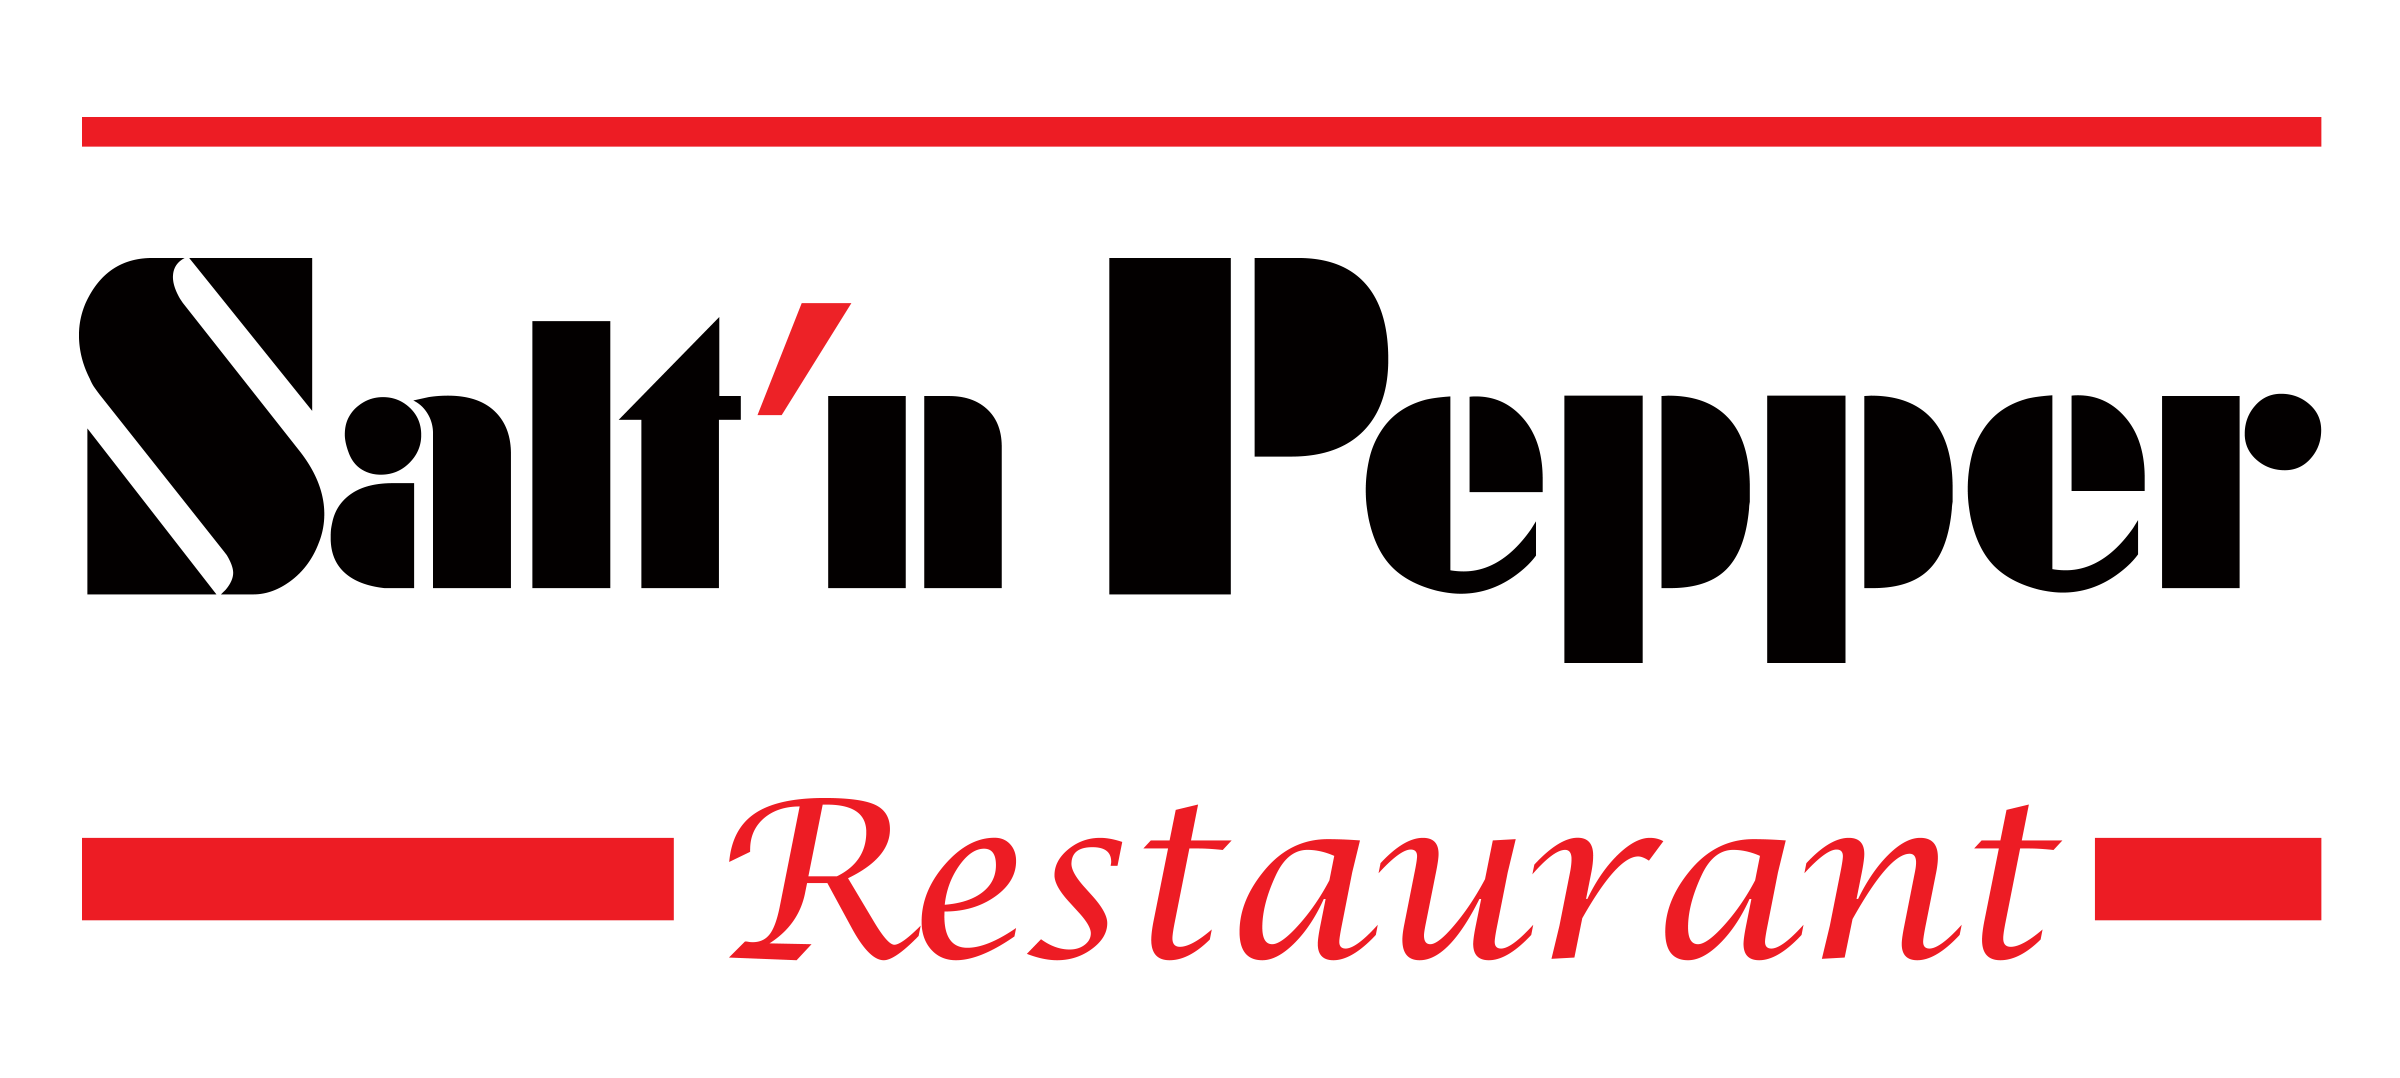 https://www.pakpositions.com/company/saltn-pepper